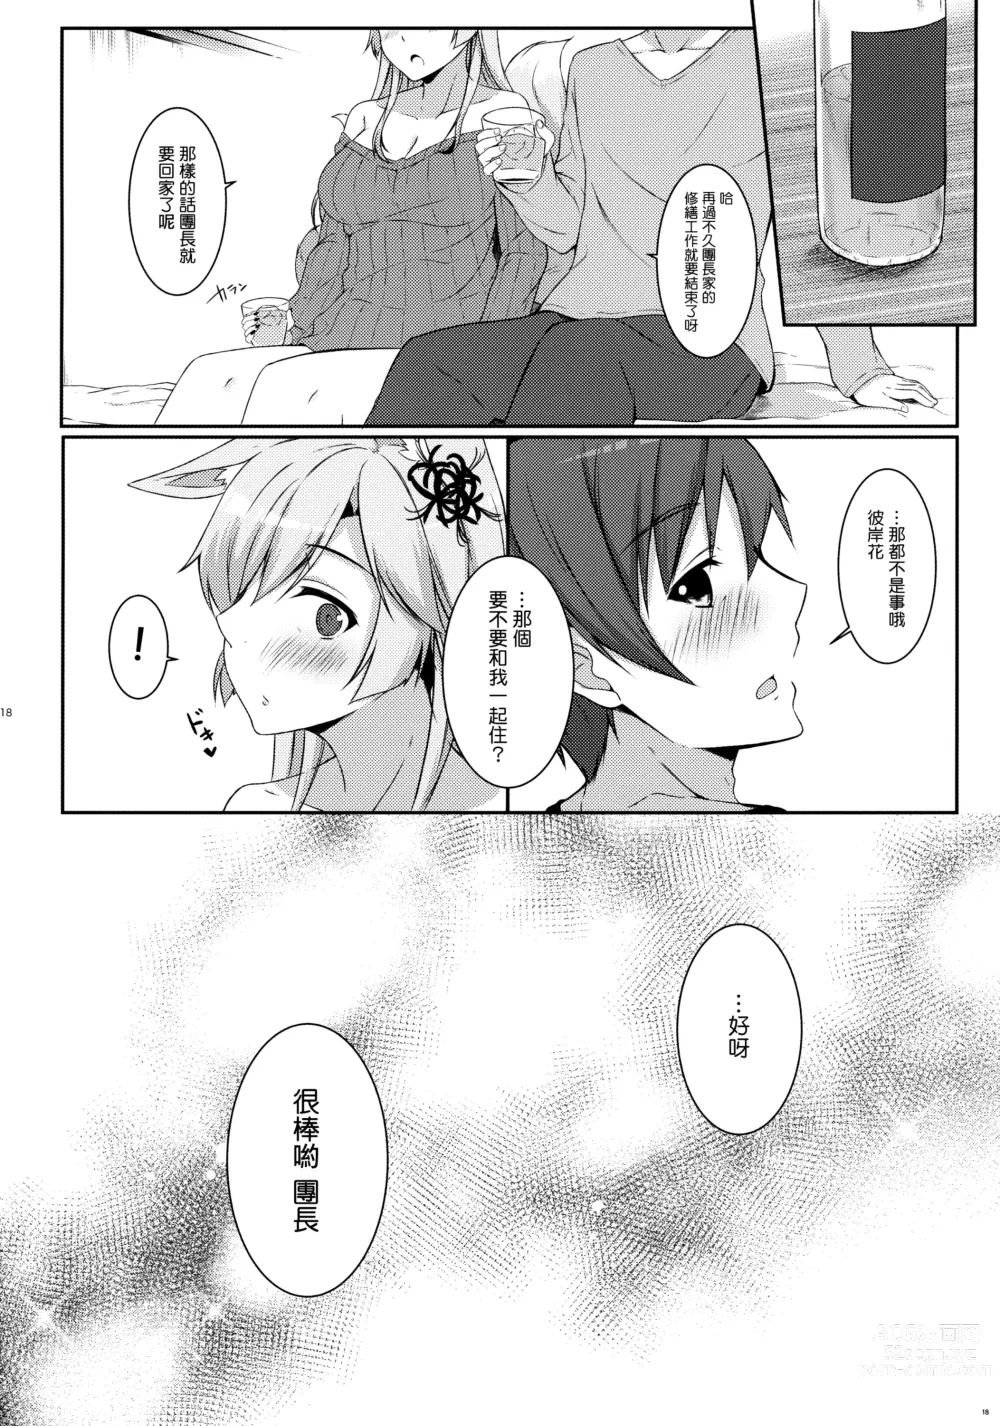 Page 19 of doujinshi Kitsune hana